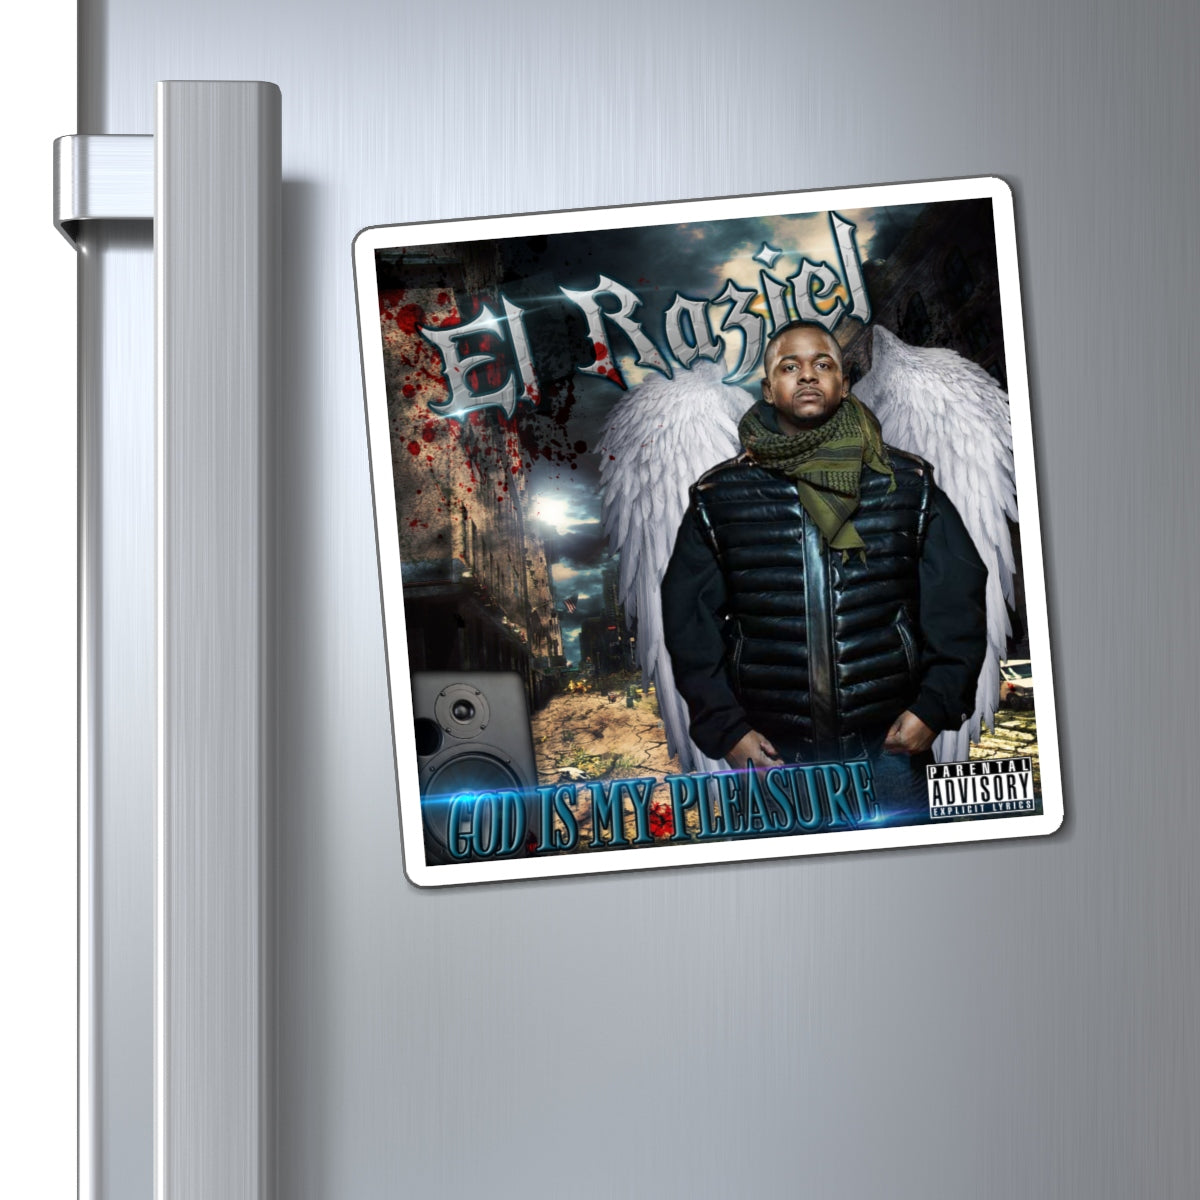 El Raziel God Is My Pleasure - HellRazah Music Inc. Limited Edition Collectible Magnet